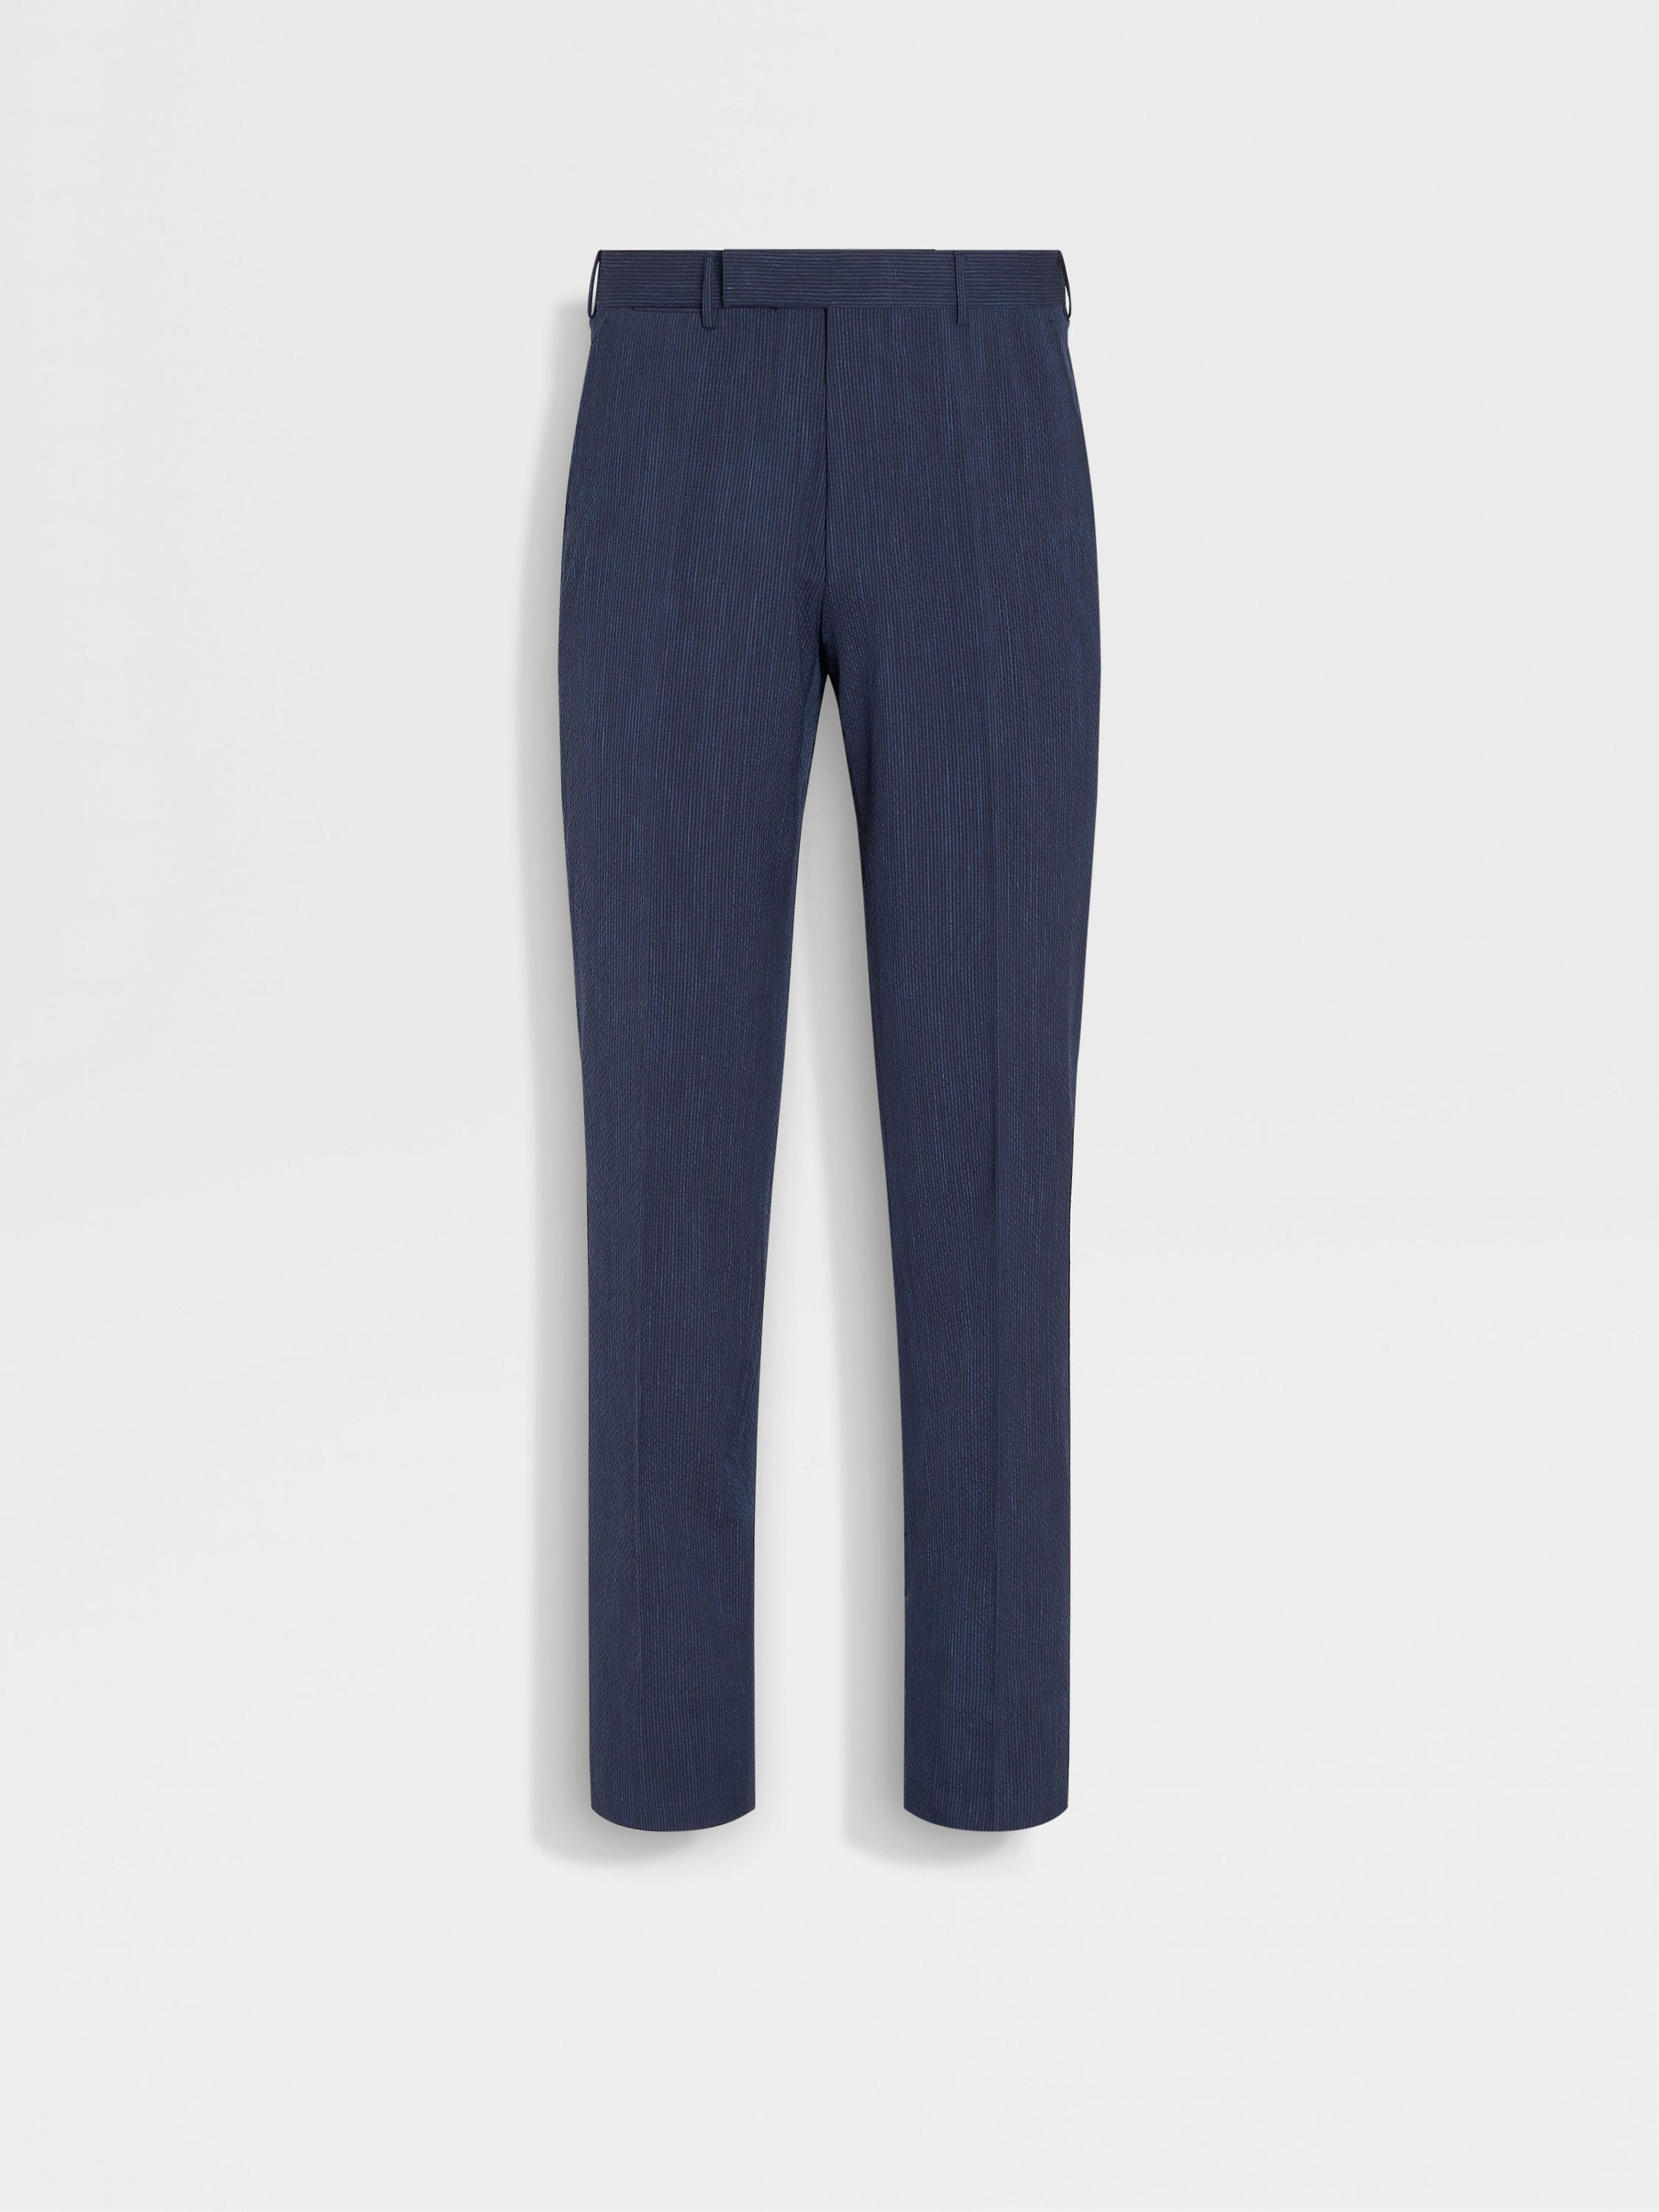 Blue and Navy Blue Trofeo™ Seersucker Wool Silk and Linen Blend Pants